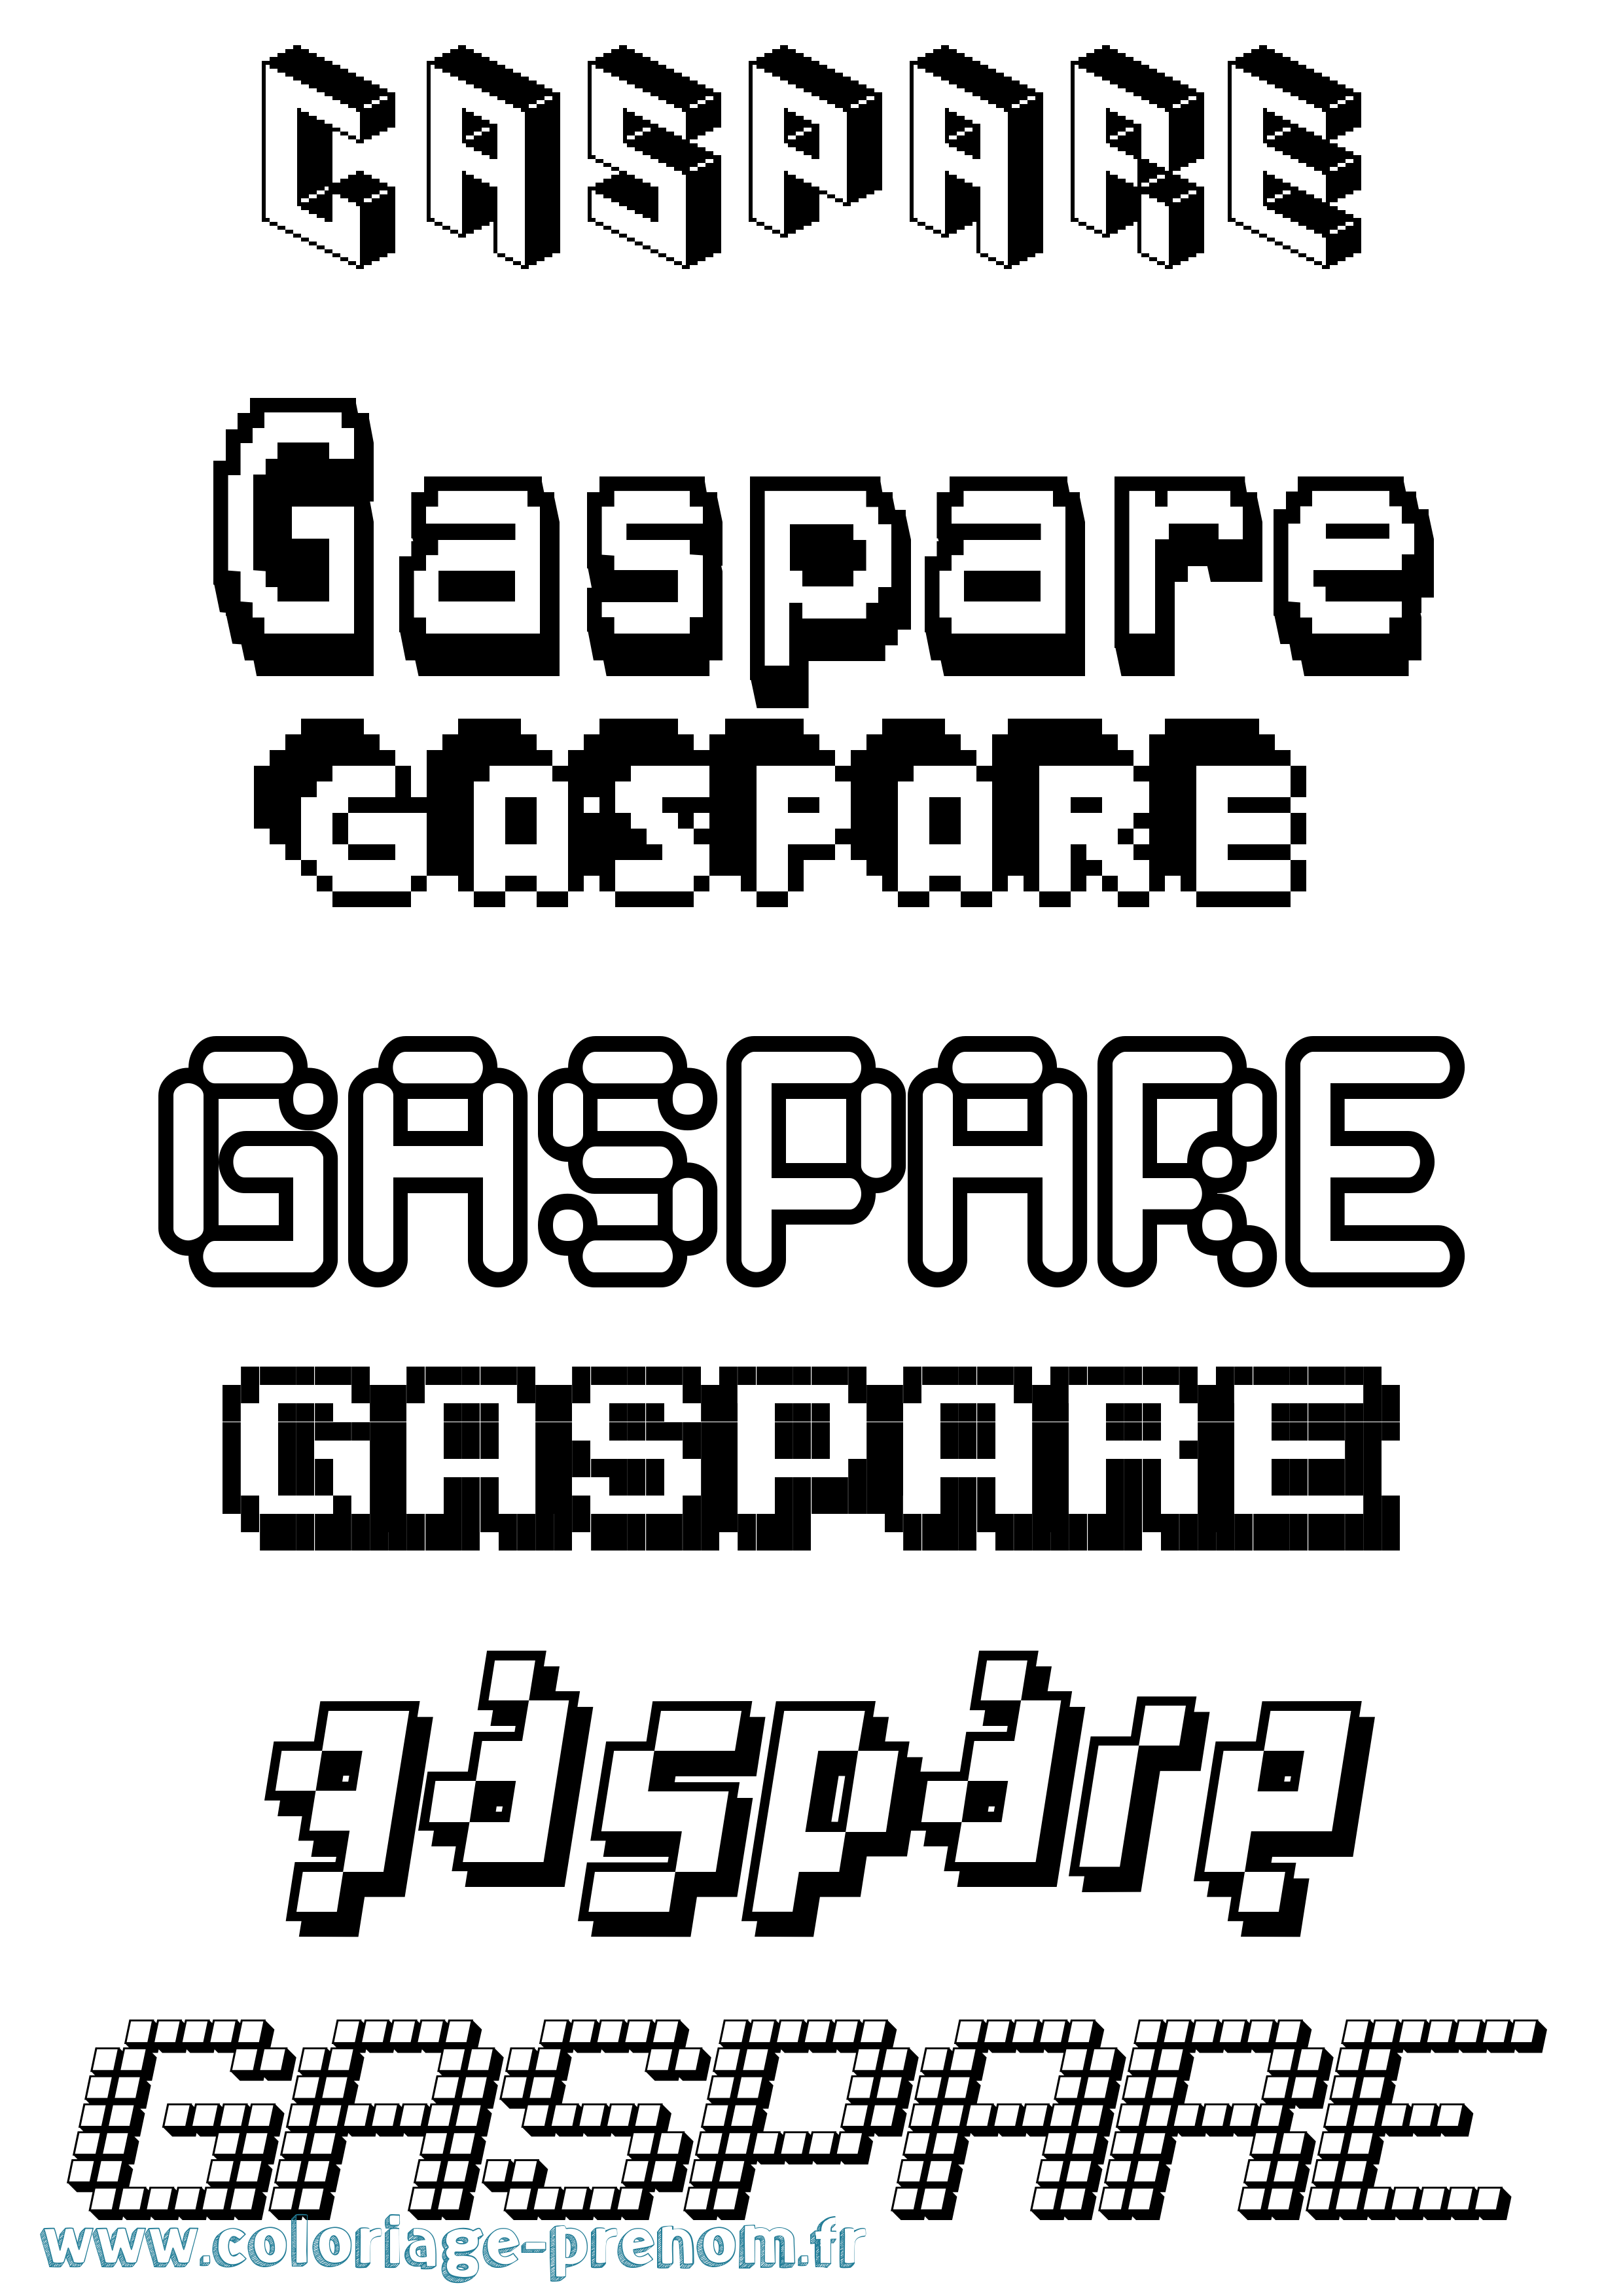 Coloriage prénom Gaspare Pixel